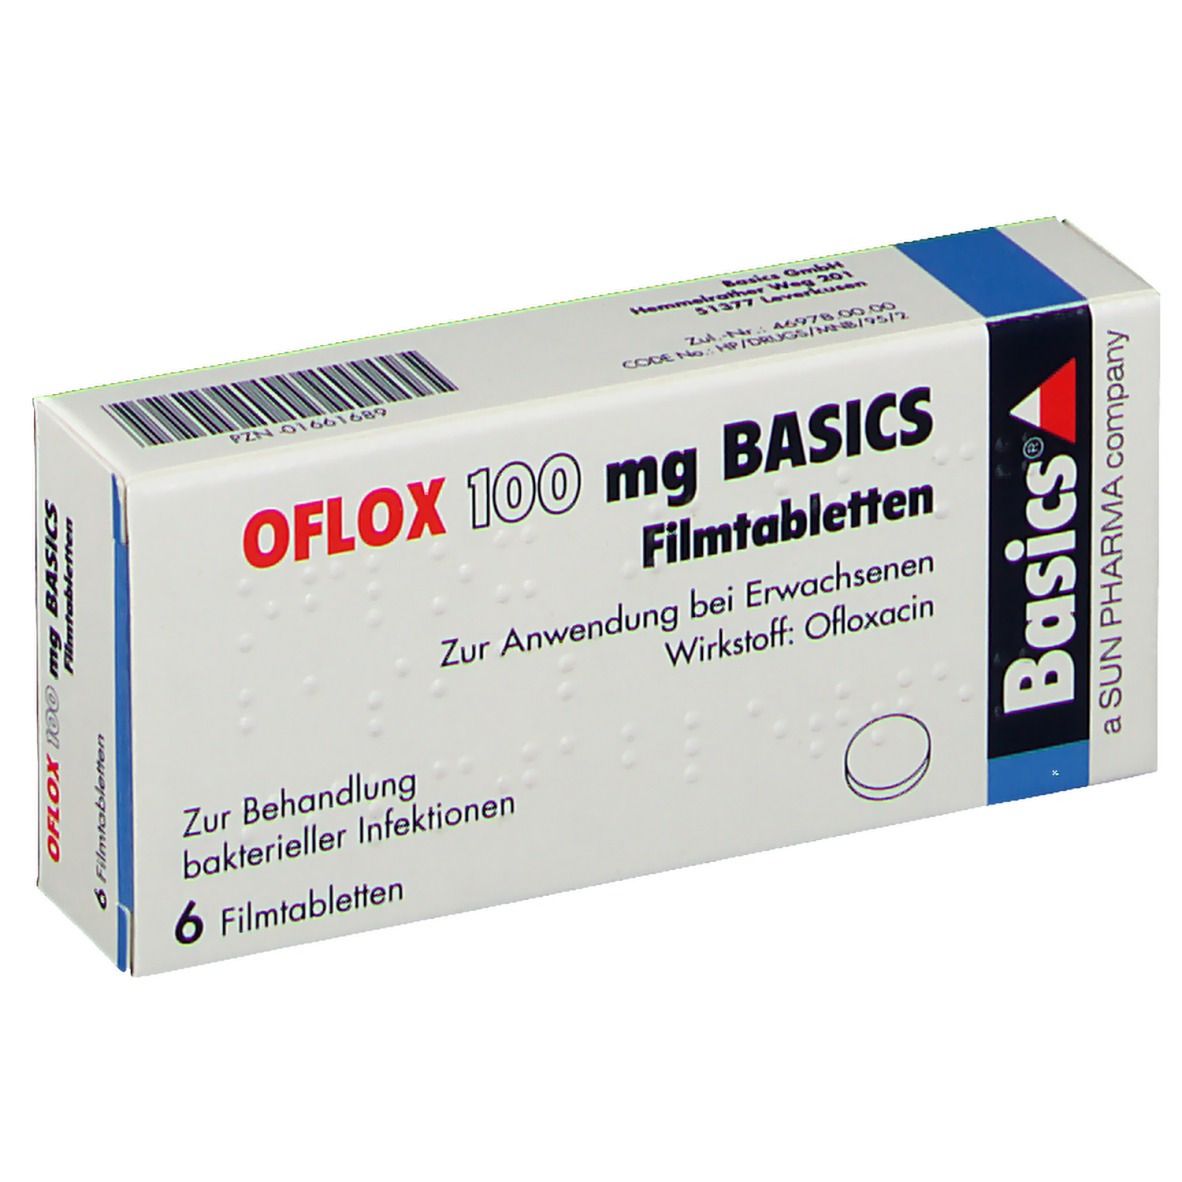 OFLOX 100 mg BASICS